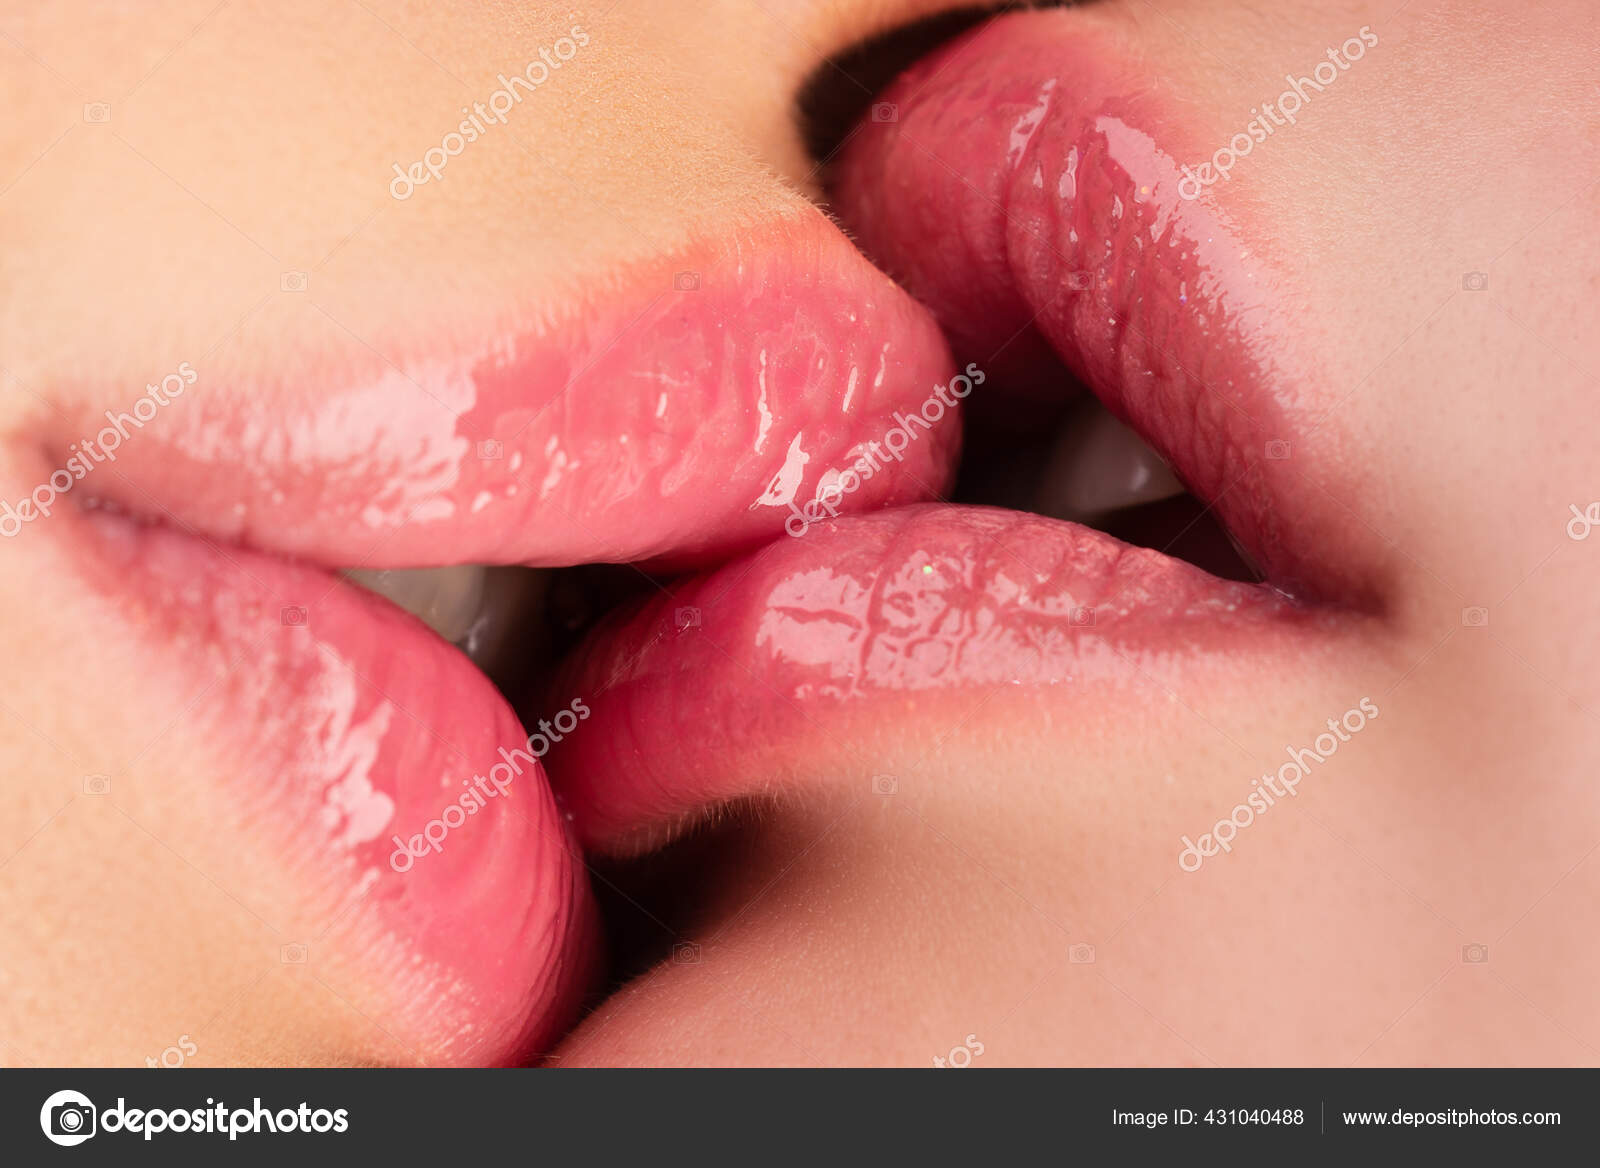 Jessica bangkok nicole lesbian couple kissing